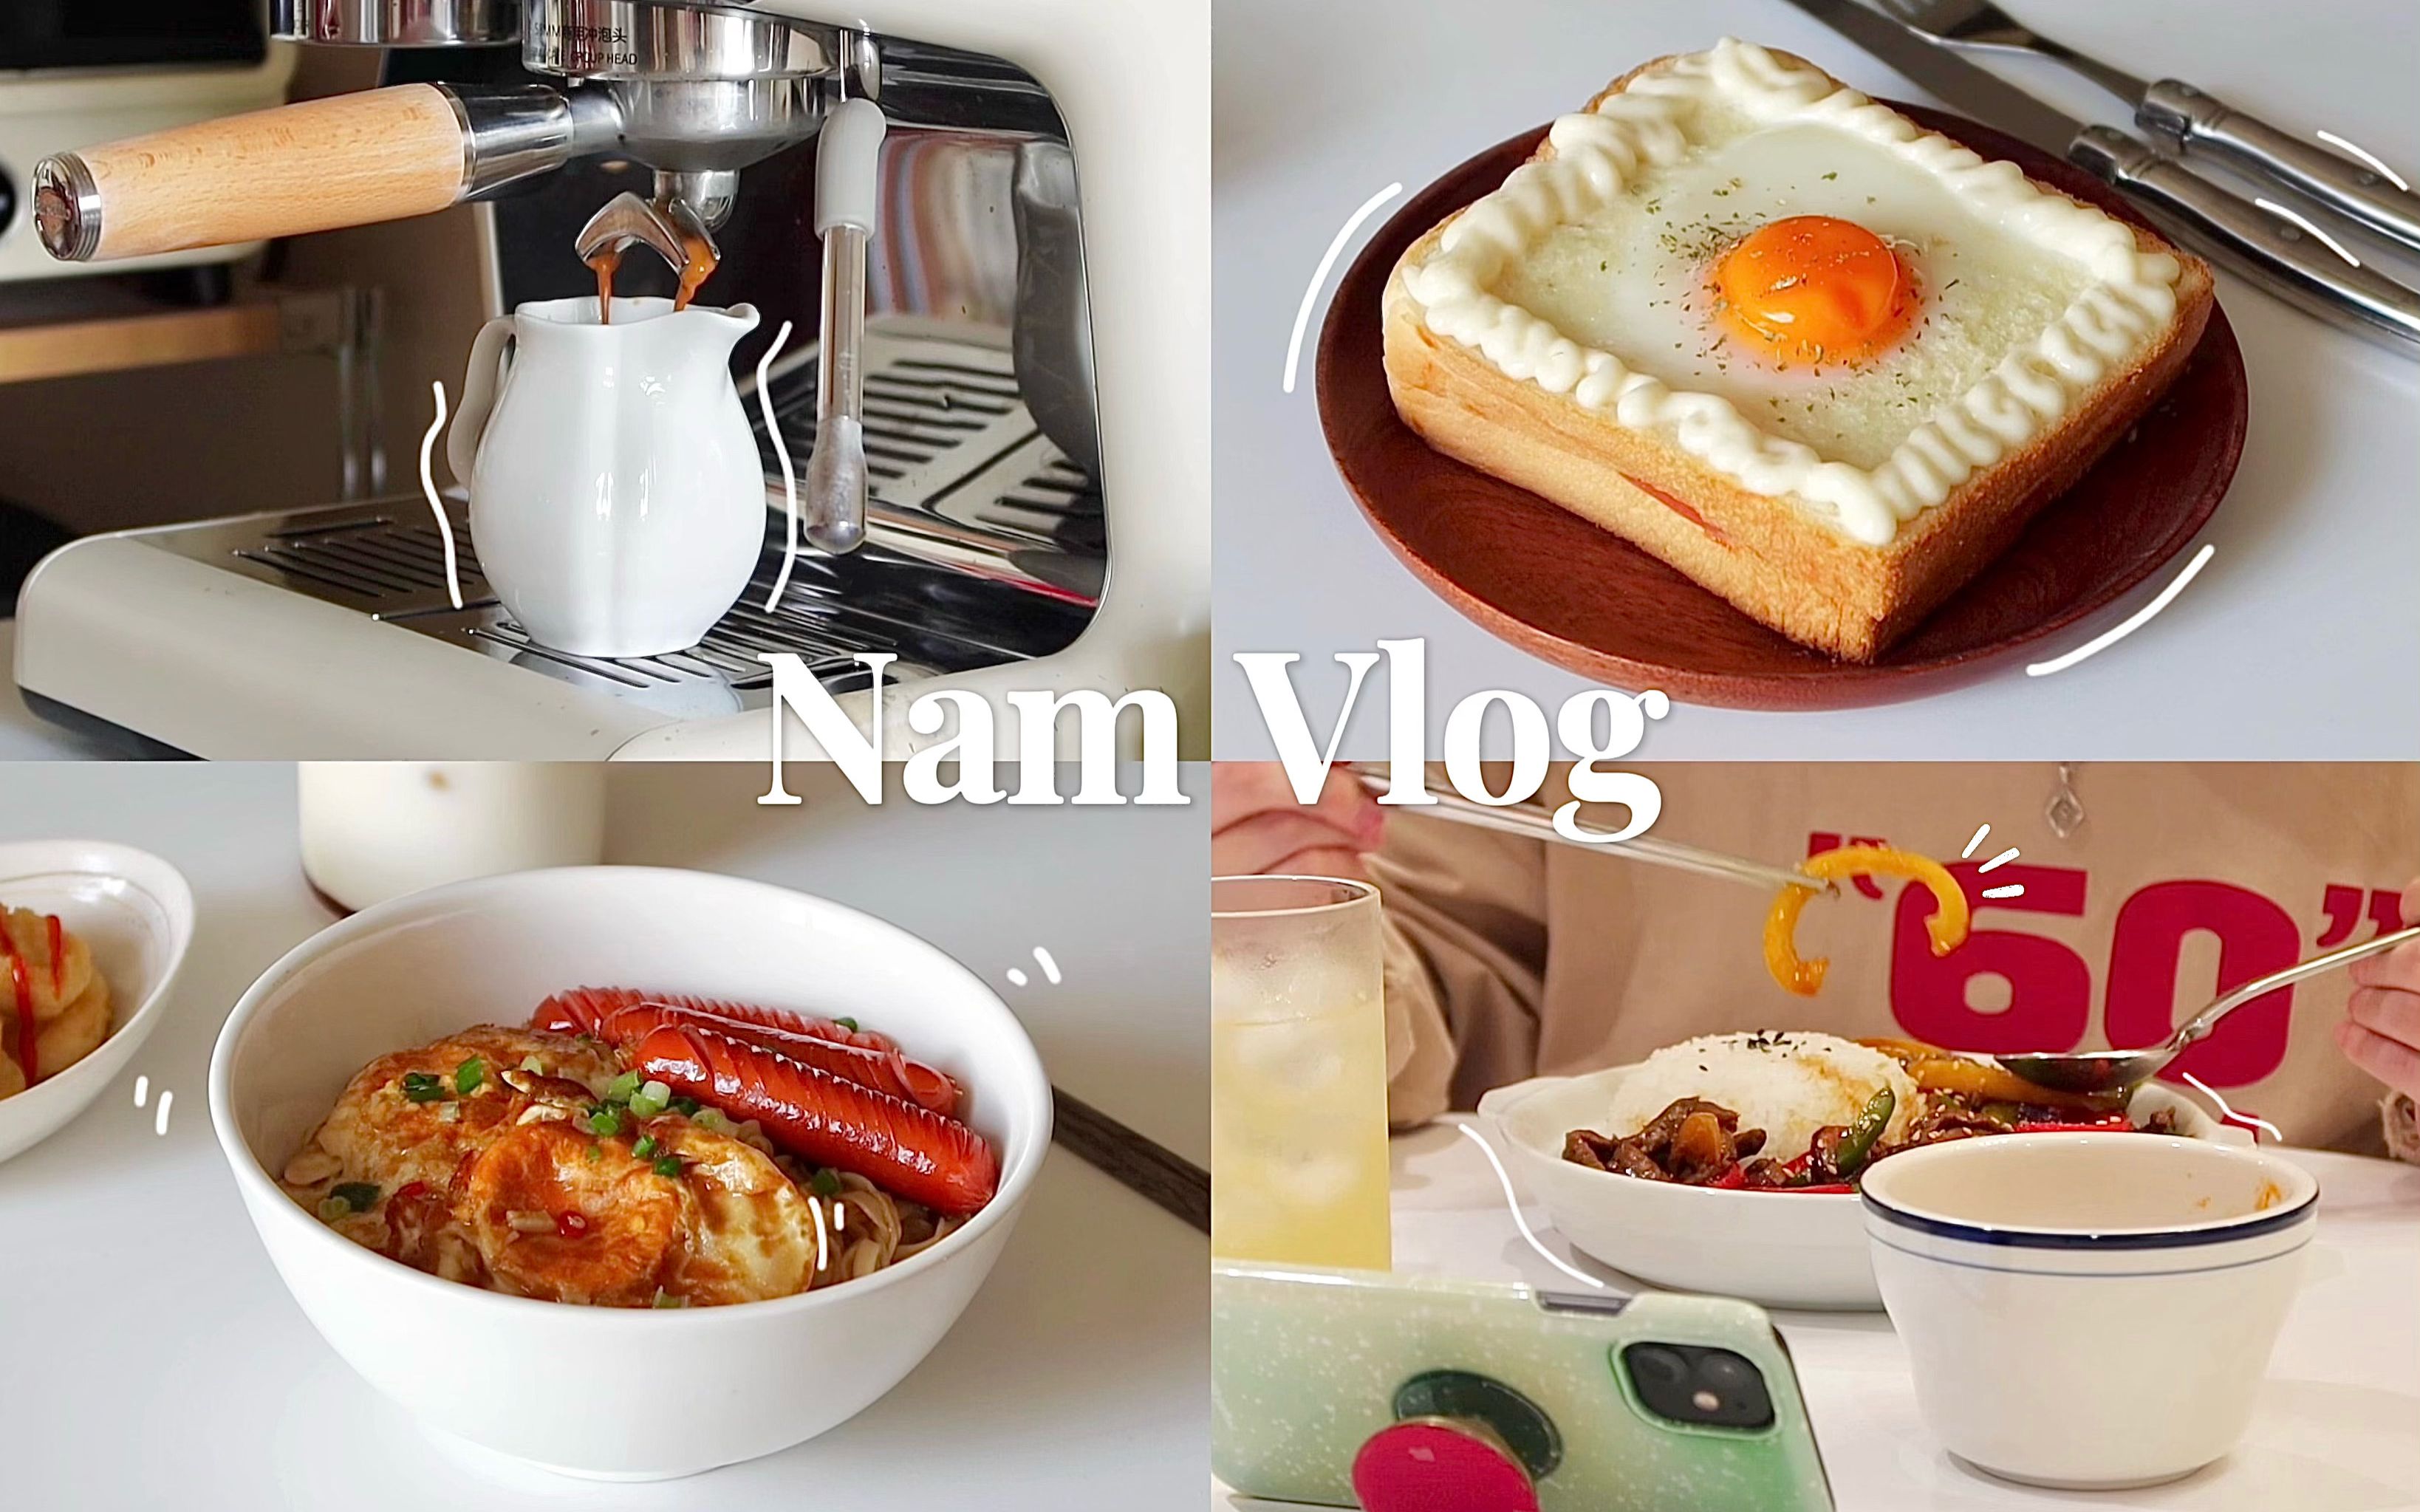 Nam Vlog丨独居宅家做饭日常•蛋黄酱吐司•荷包蛋焖面•黑椒牛柳盖浇饭•蛤蜊丝瓜汤面•i人悠闲地准备和享受早餐吧•一个人的惬意时间•治愈vlog